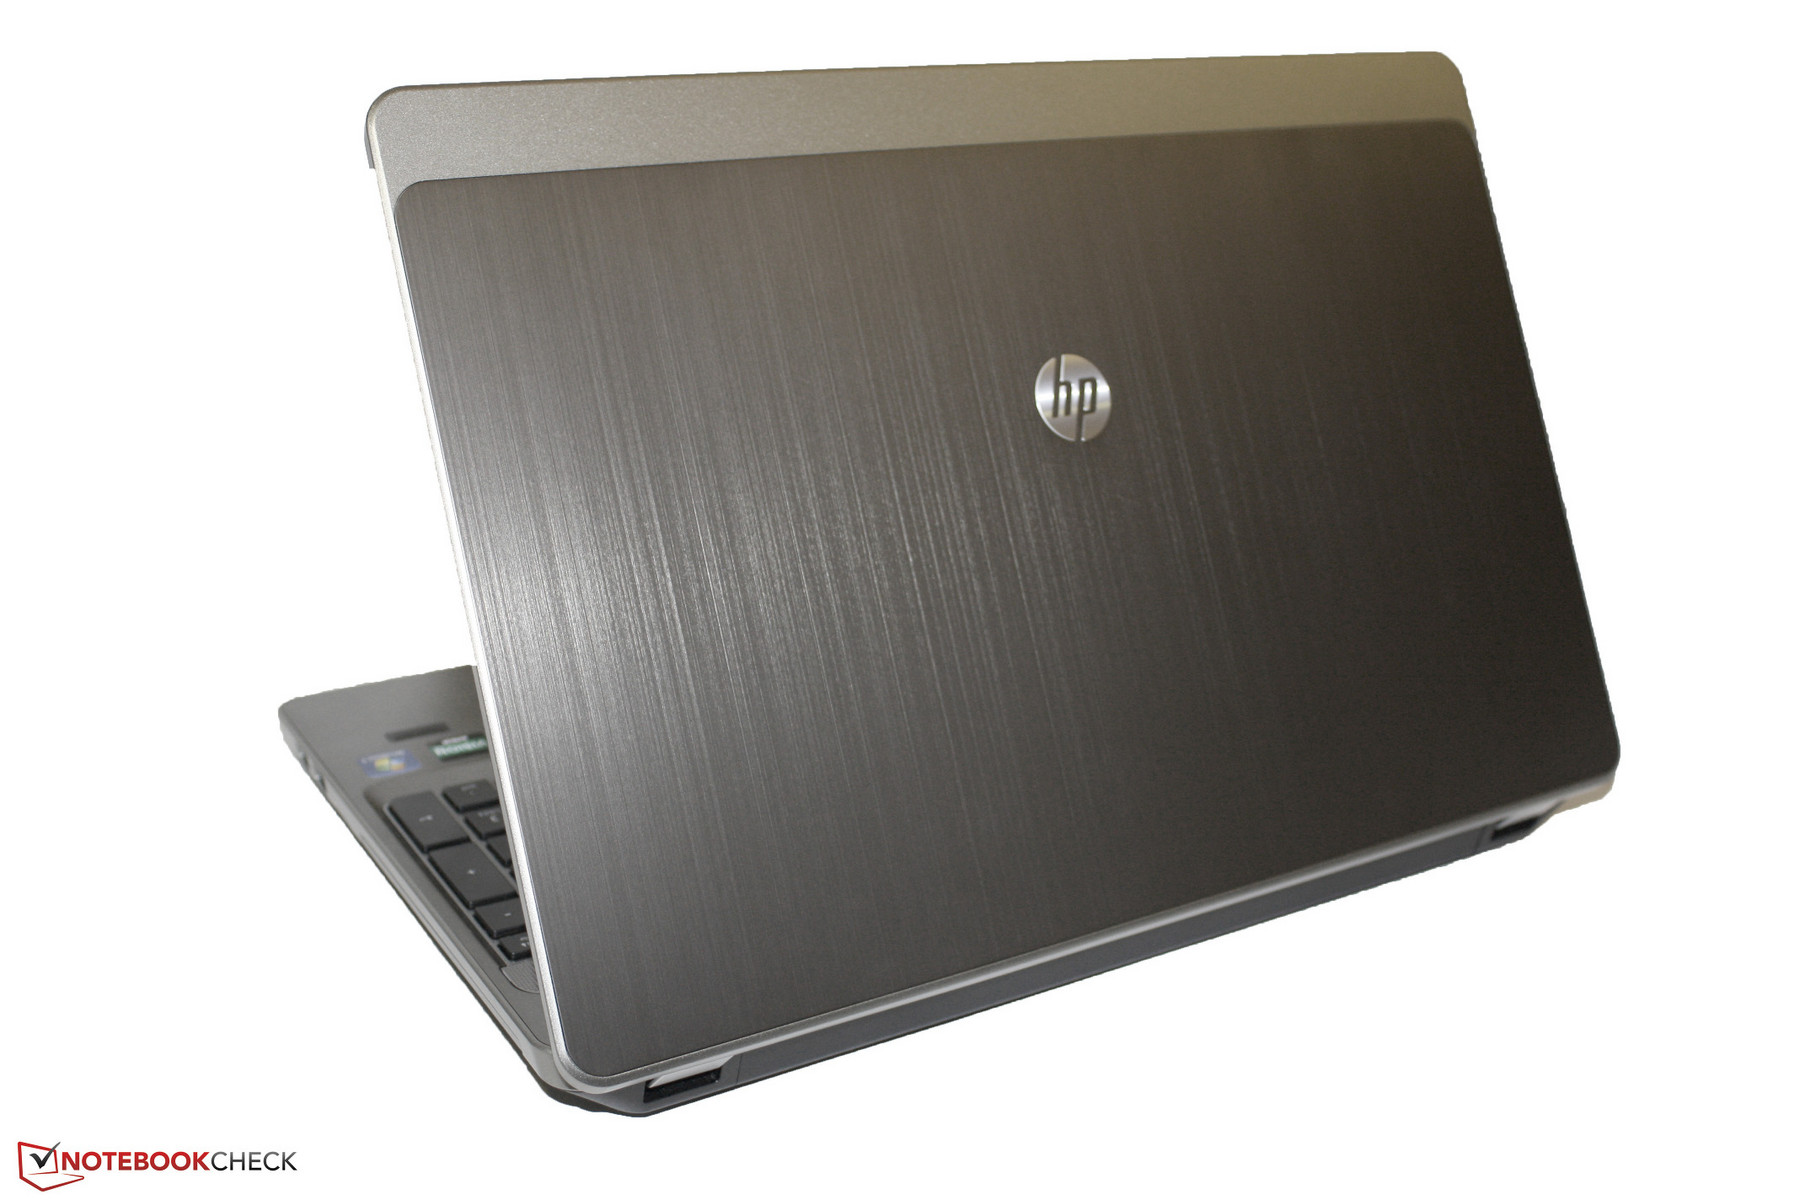 ProBook 4535s Notebook PC